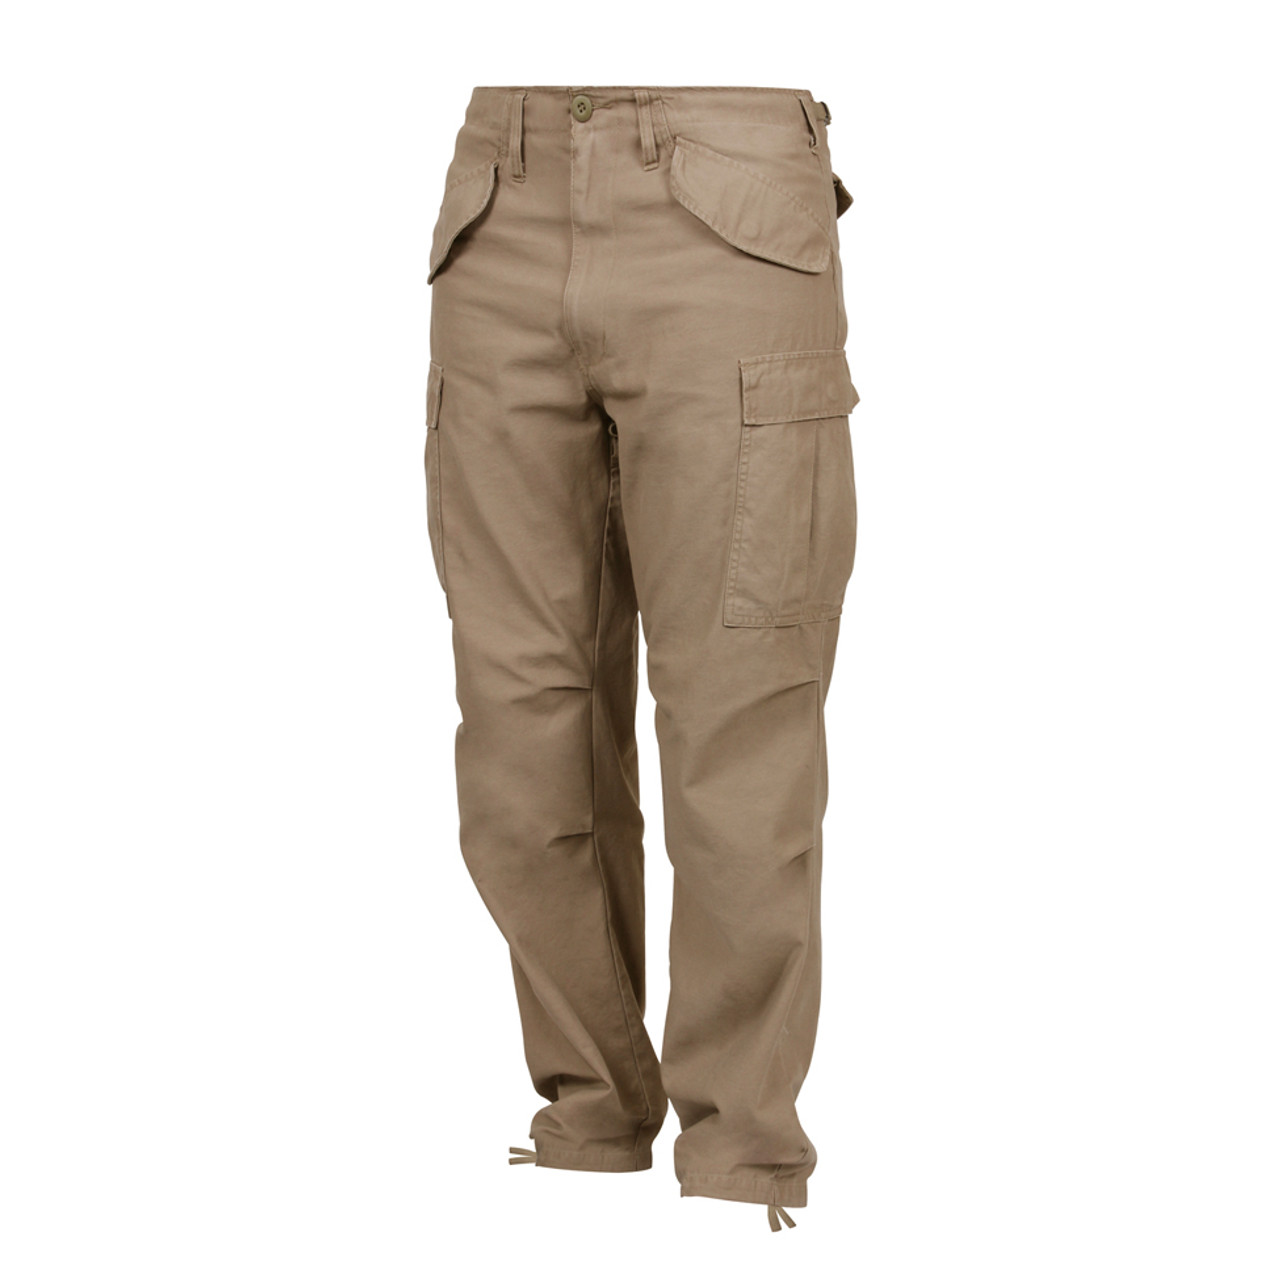 Shop Vintage M 65 Khaki Field Pants - Fatigues Army Navy Gear